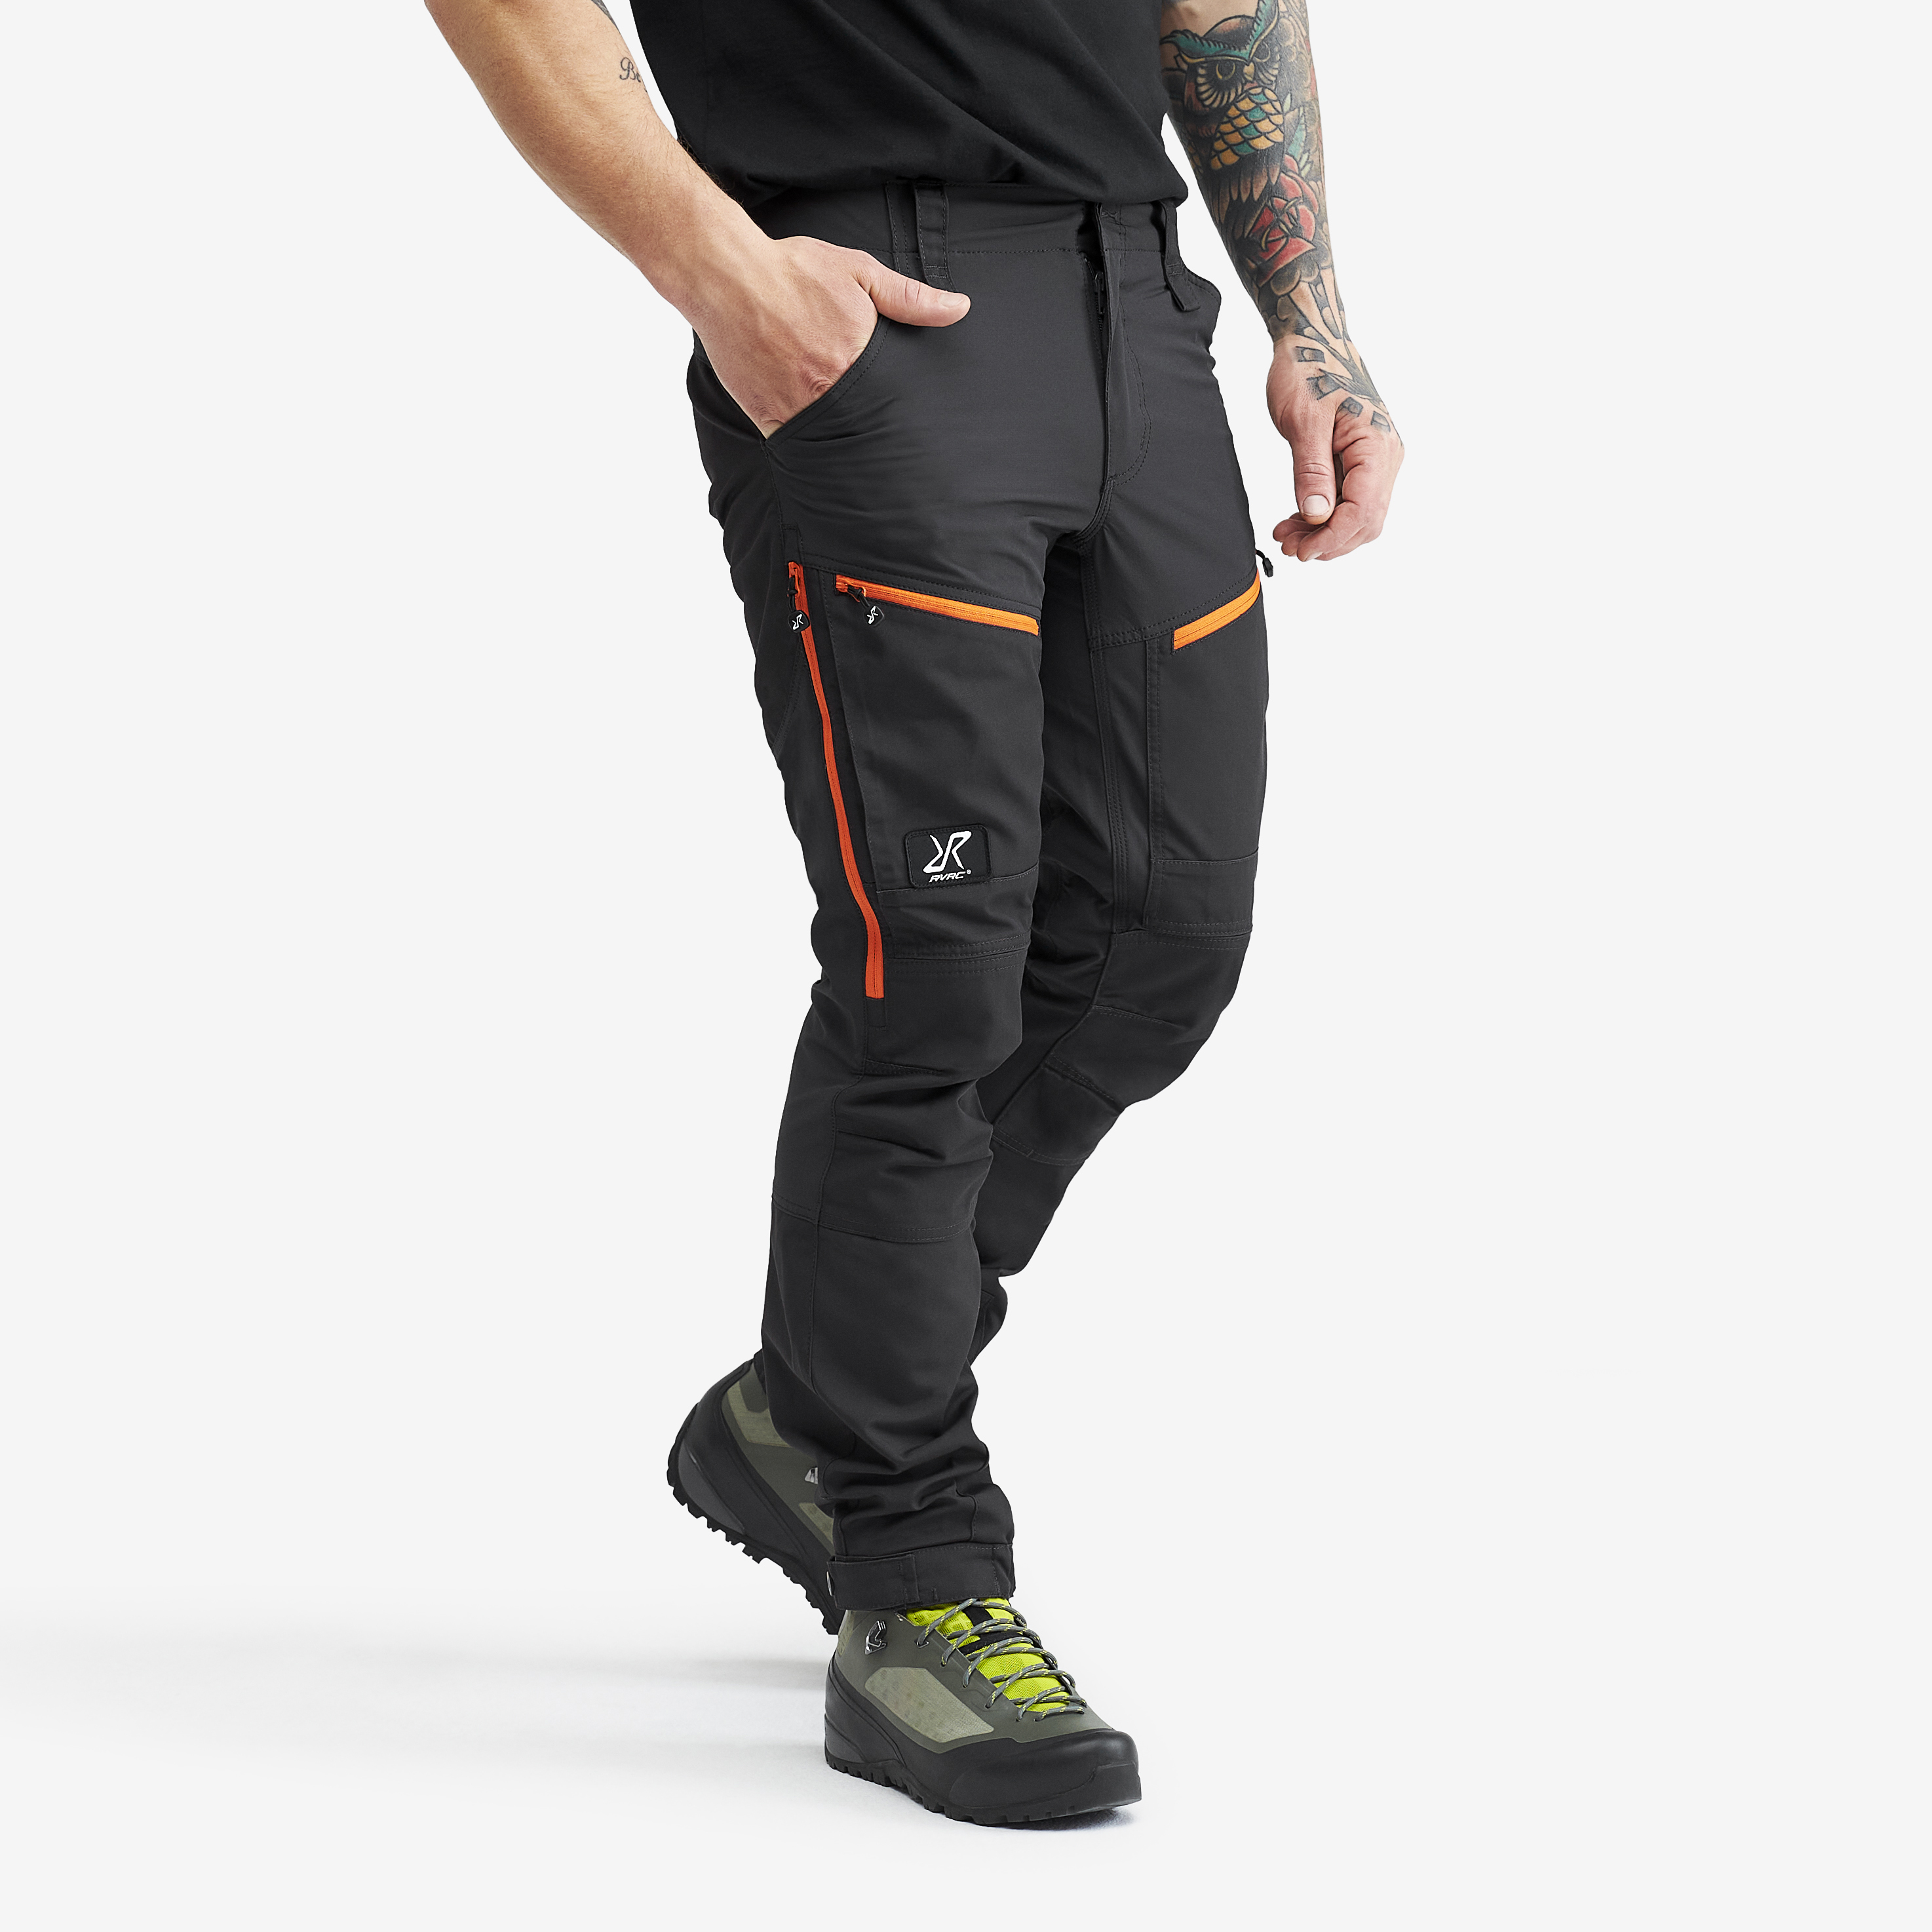 RVRC GP Pro Short spodnie trekkingowe męskie ciemno szary